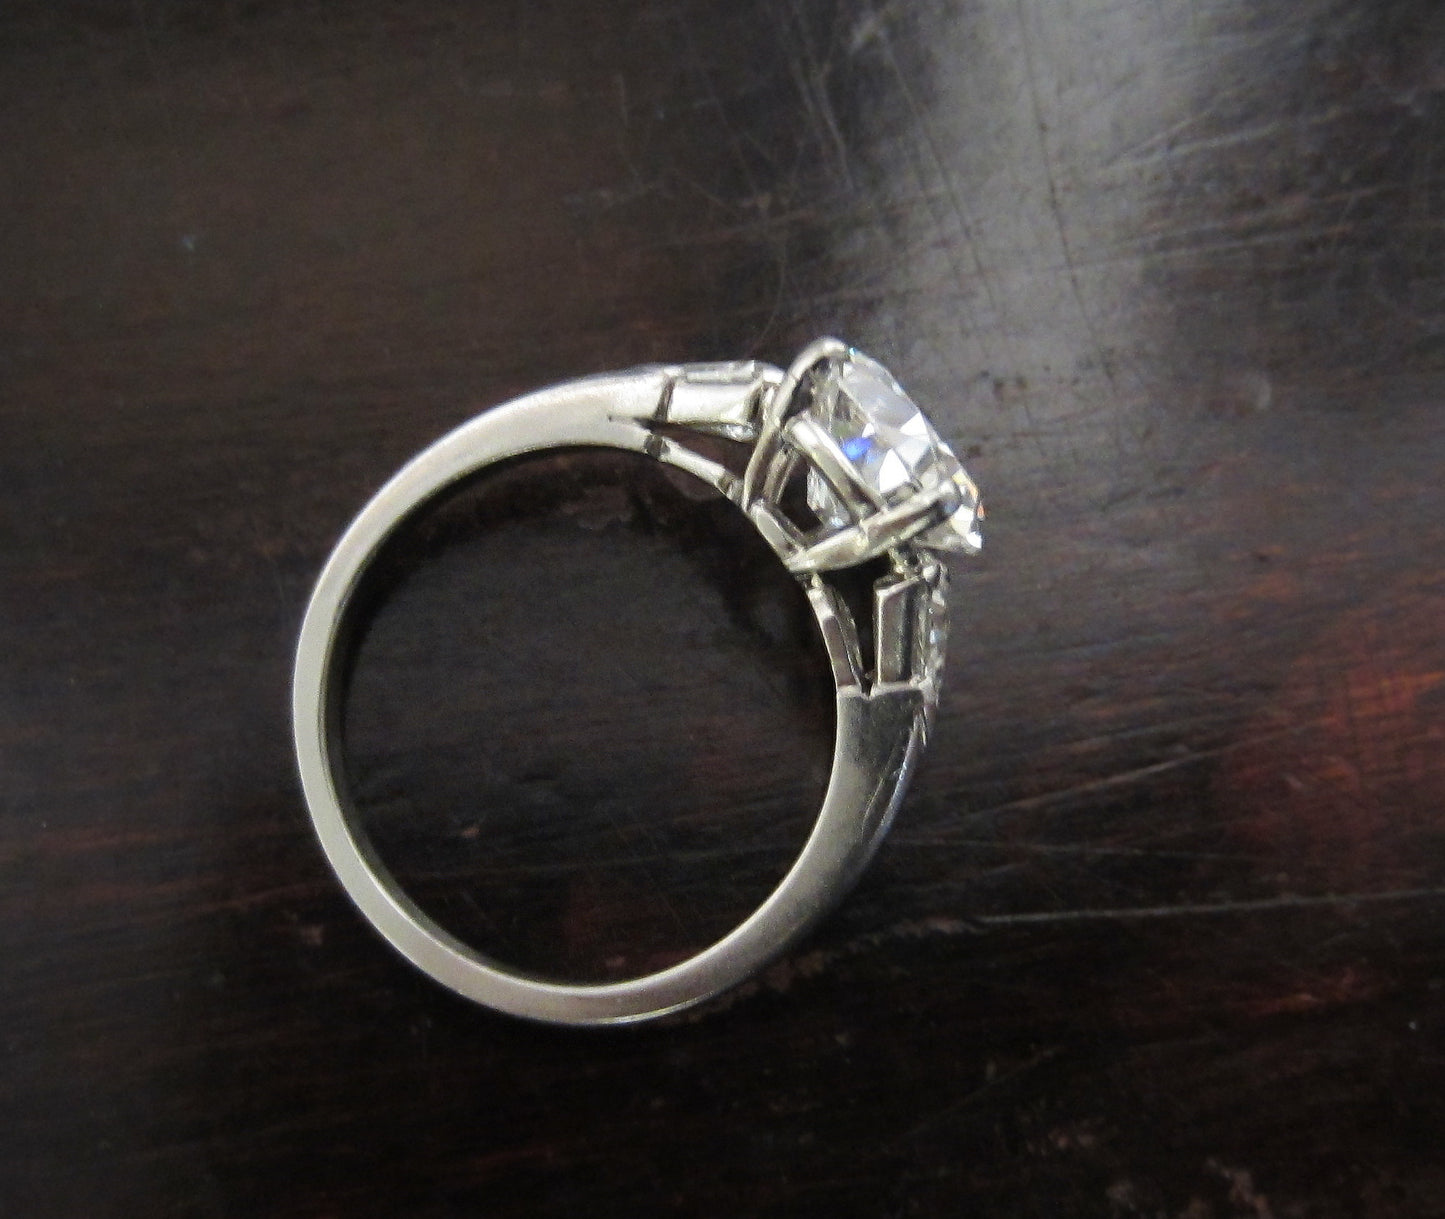 SOLD--Late Art Deco Pear Cut Diamond 2.41ct FVS1 Engagement Ring Platinum c. 1940